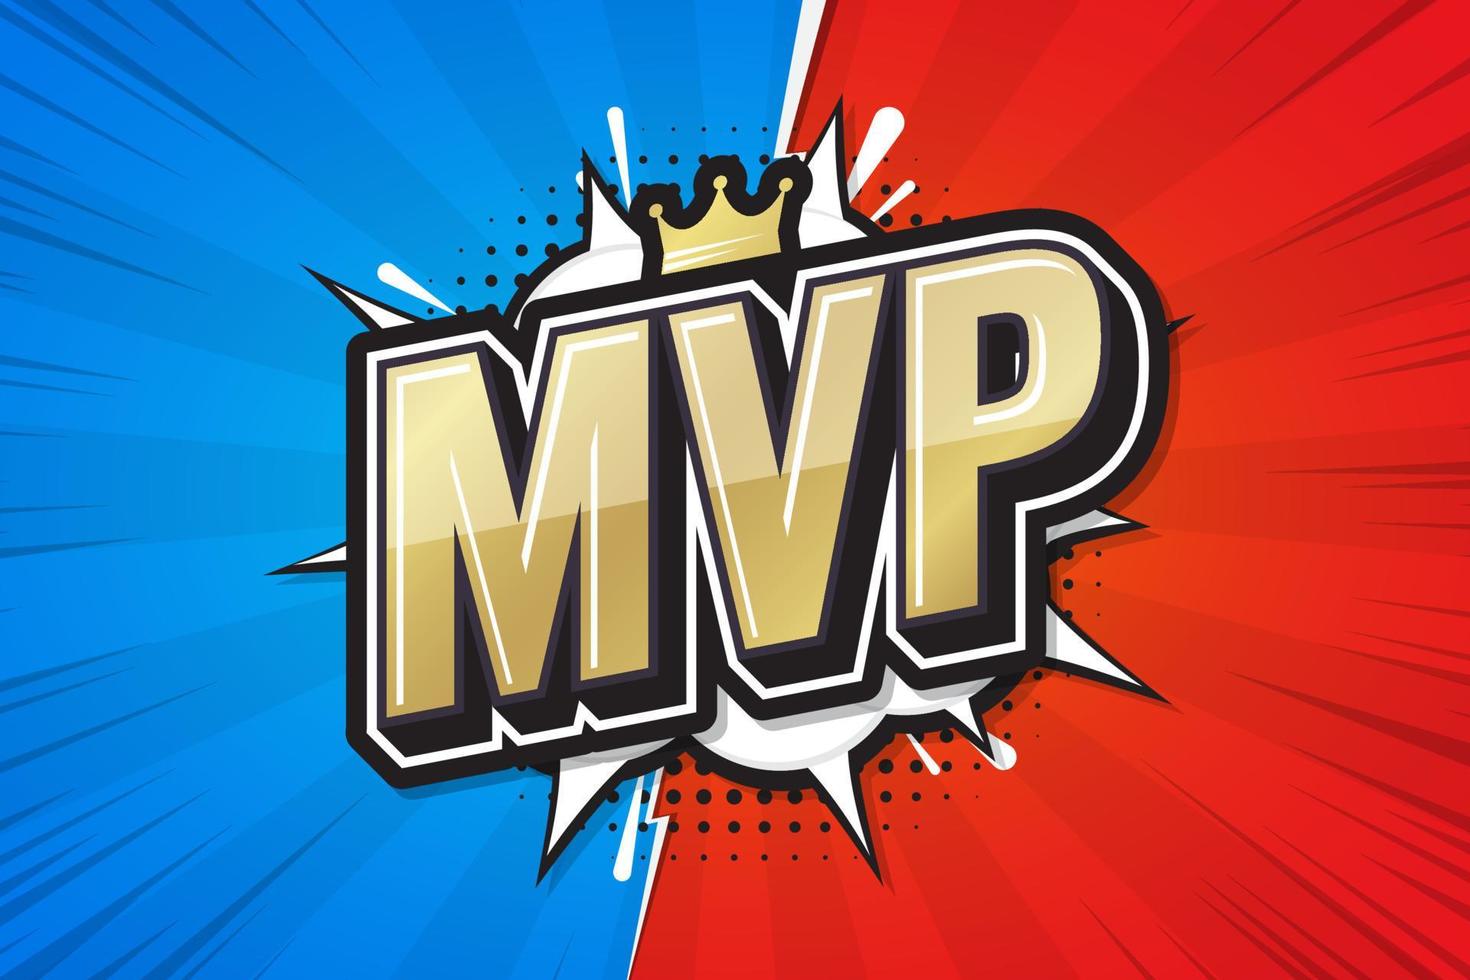 Most Valuable Player, MVP poster comic speech bubble. Vector illustration